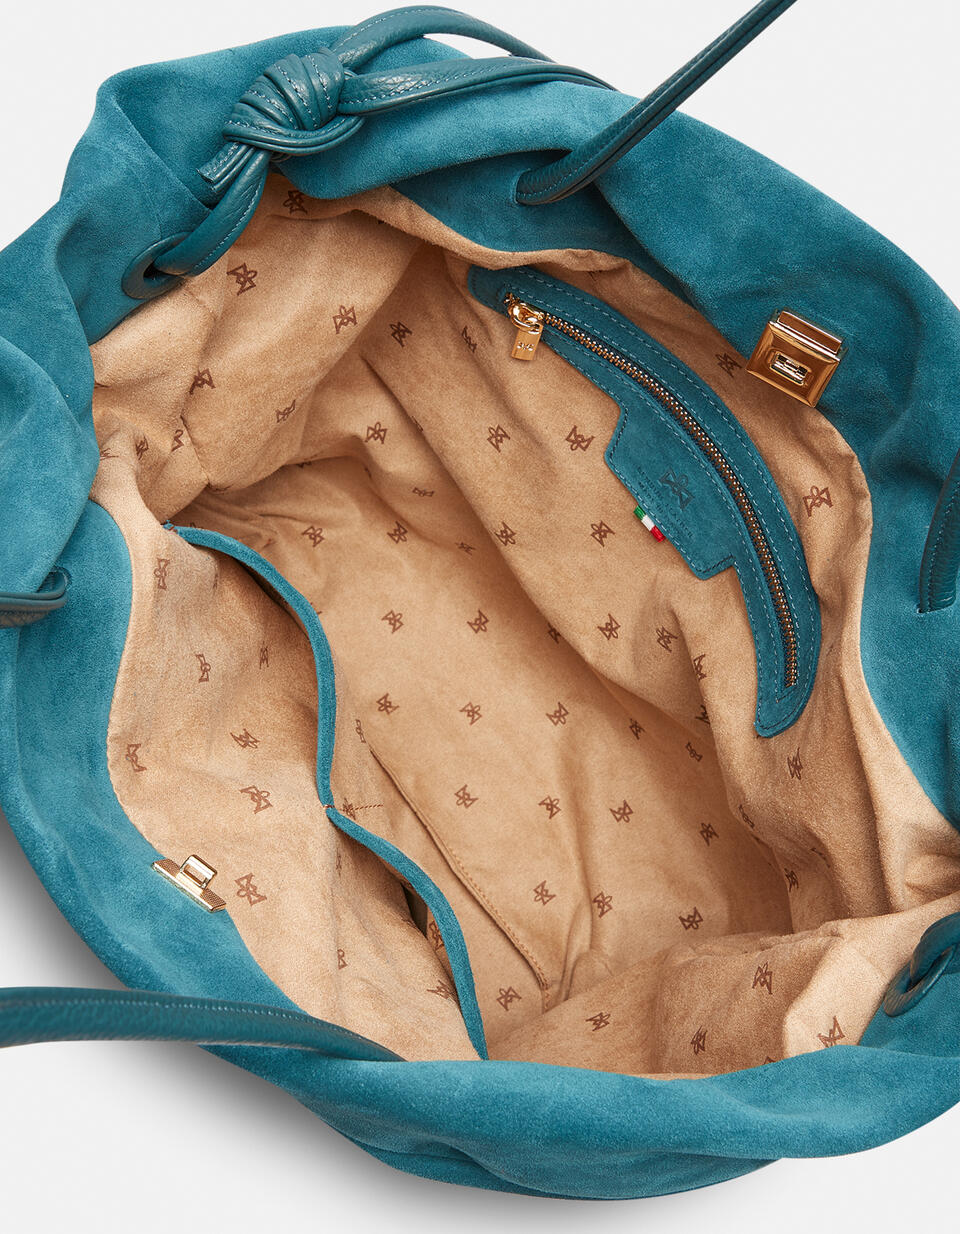 Air Large shopping bag - SHOPPING - WOMEN'S BAGS | bags PETROLIO - SHOPPING - WOMEN'S BAGS | bagsCuoieria Fiorentina